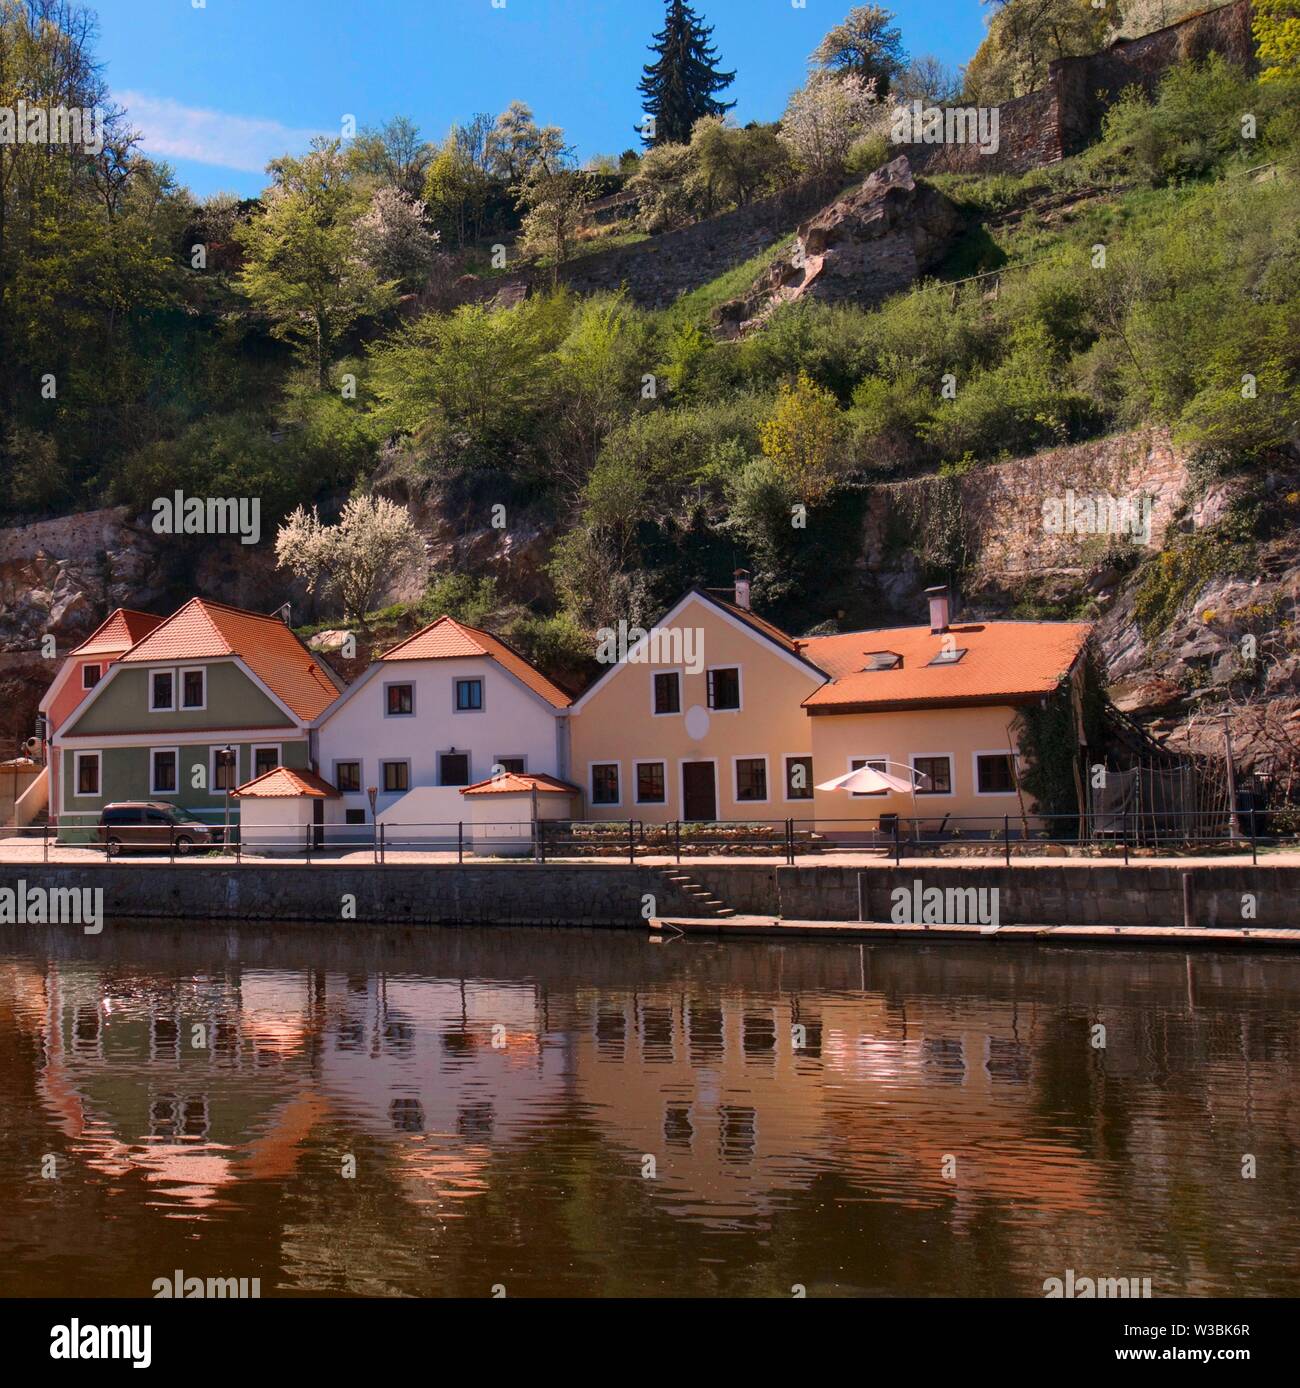 Houses on Vltava River in medieval town of Cesky Krumlov in Czech Republic. Cesky Krumlov is a UNESCO World Heritage Site. Stock Photo